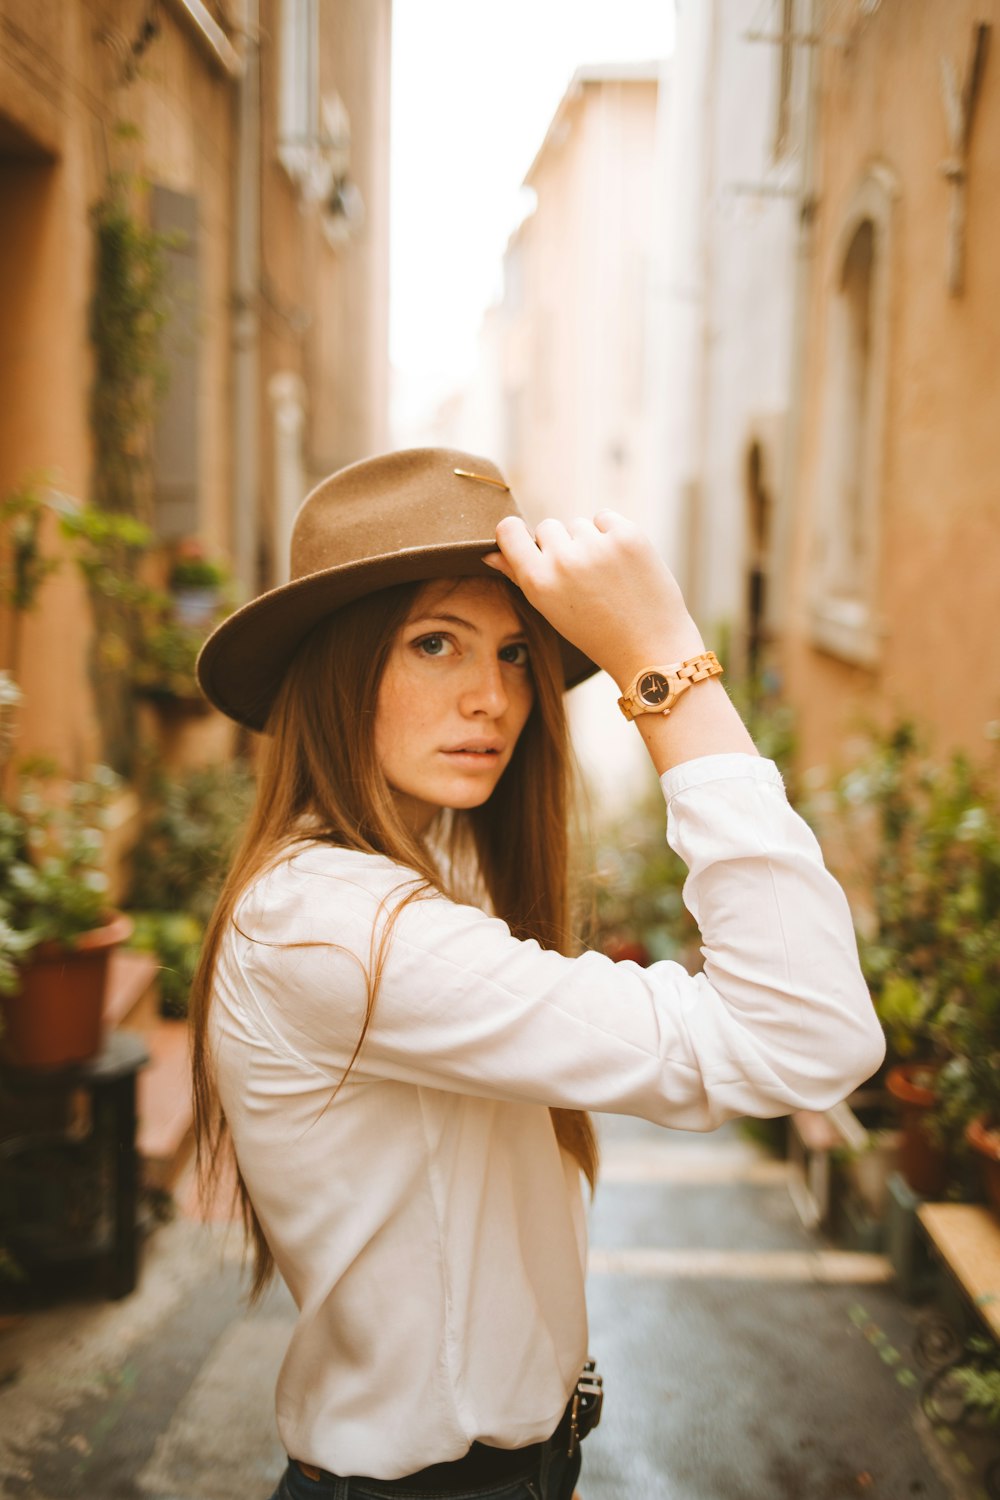 woman wearing brown hat